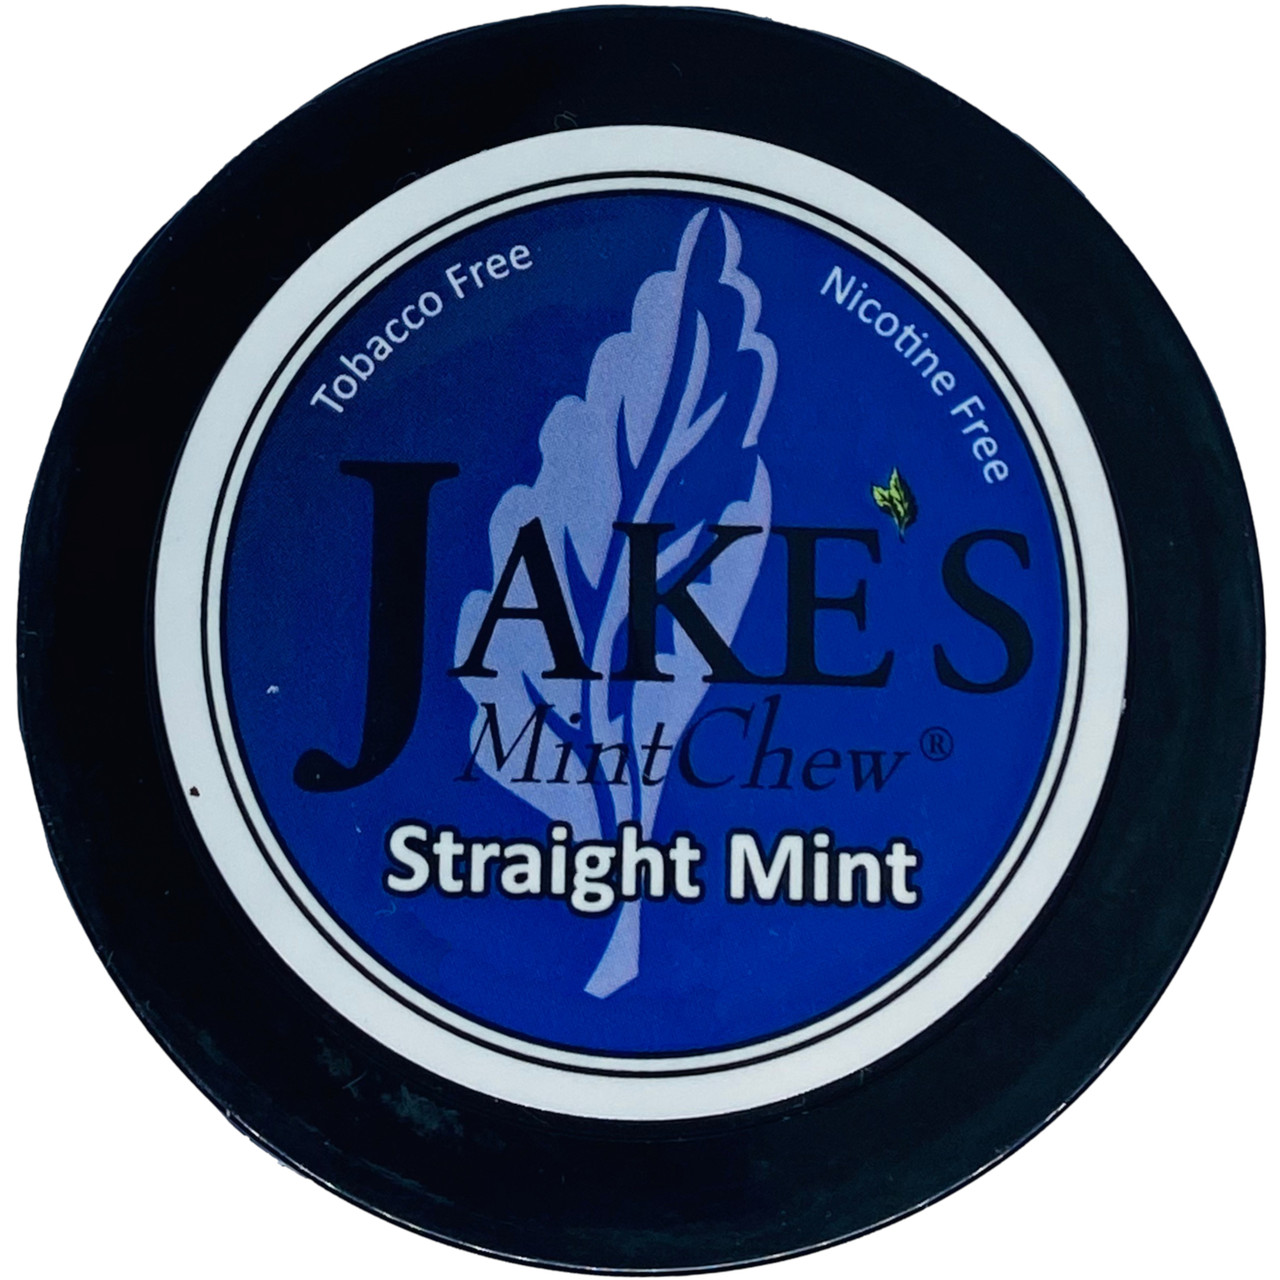 Jake's Mint Chew Straight Mint 1 Can